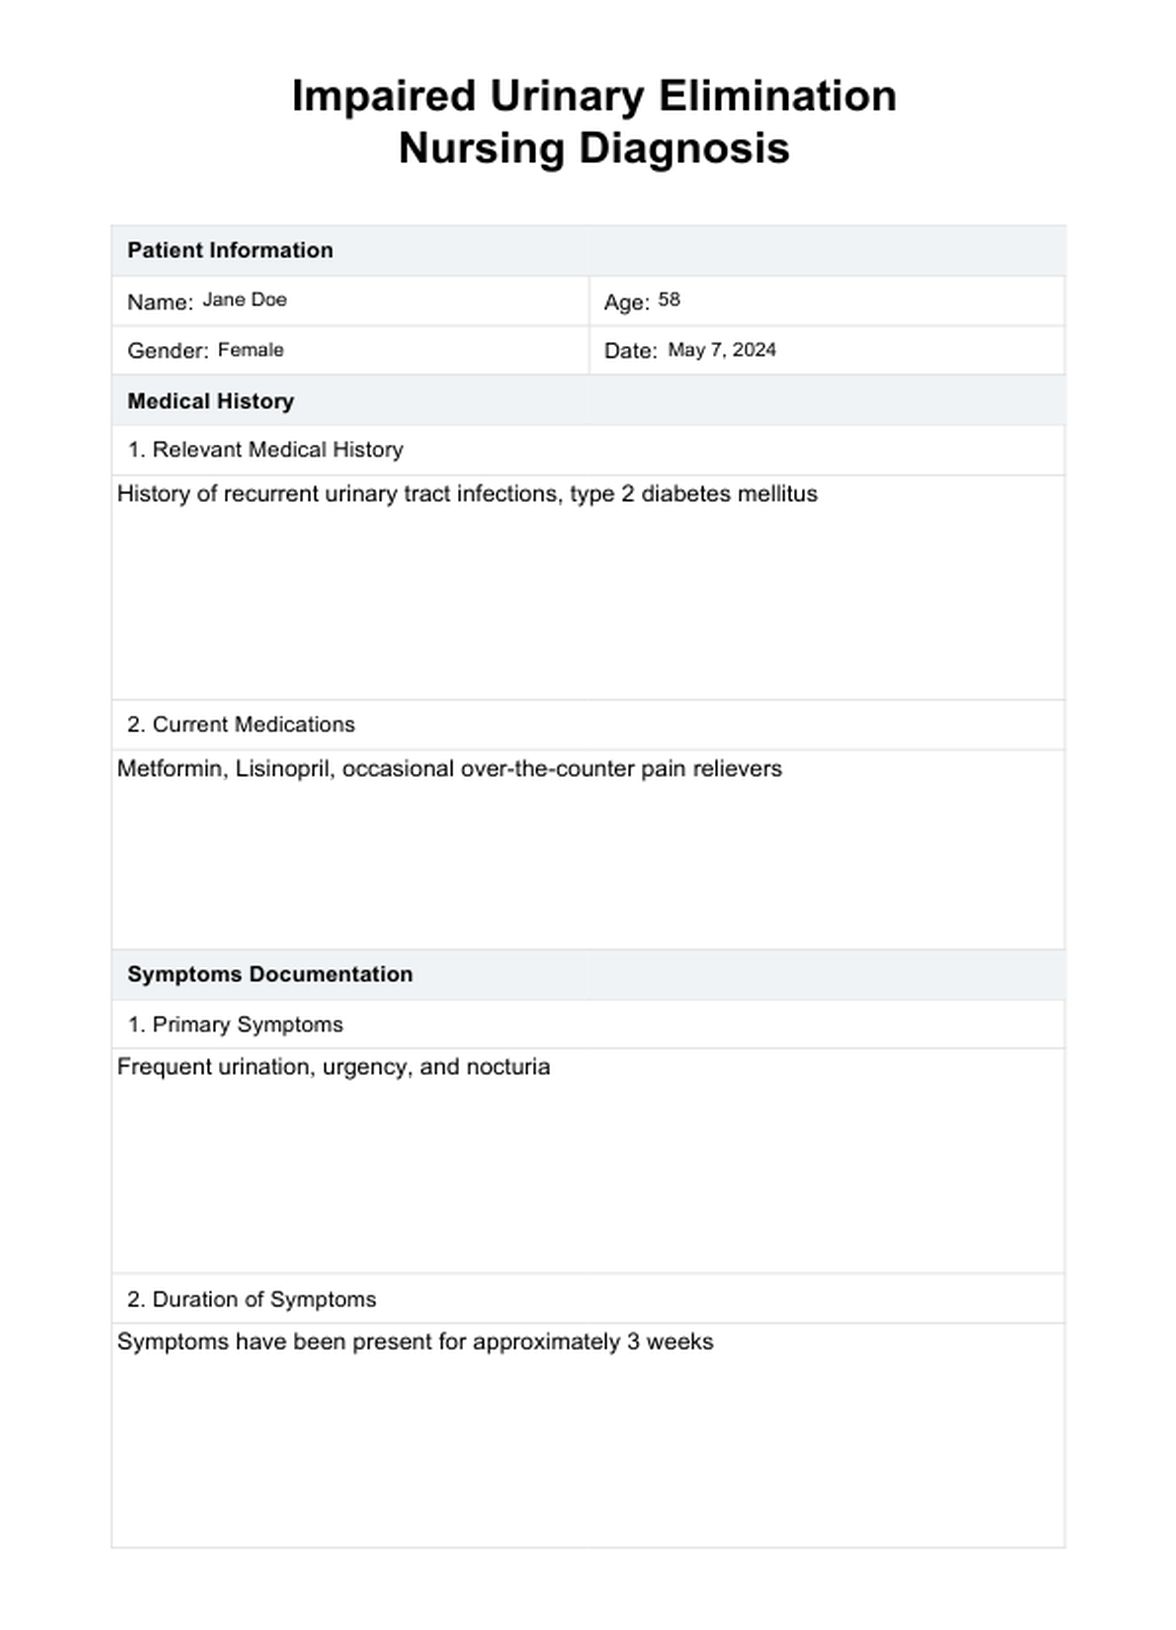 Impaired Urinary Elimination Nursing Diagnosis PDF Example